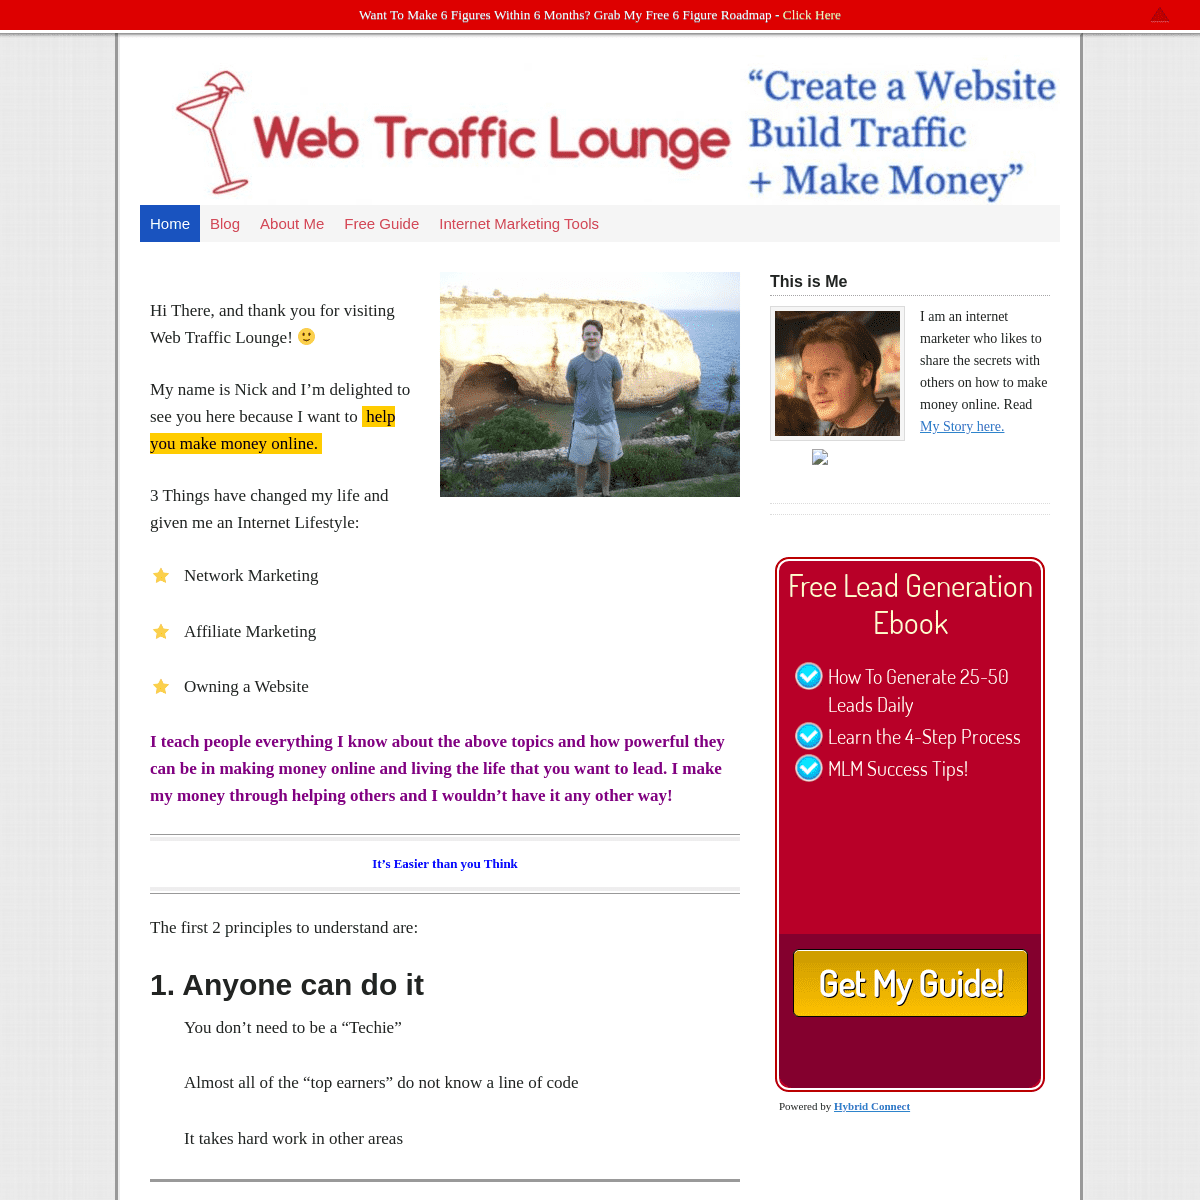 A complete backup of webtrafficlounge.com